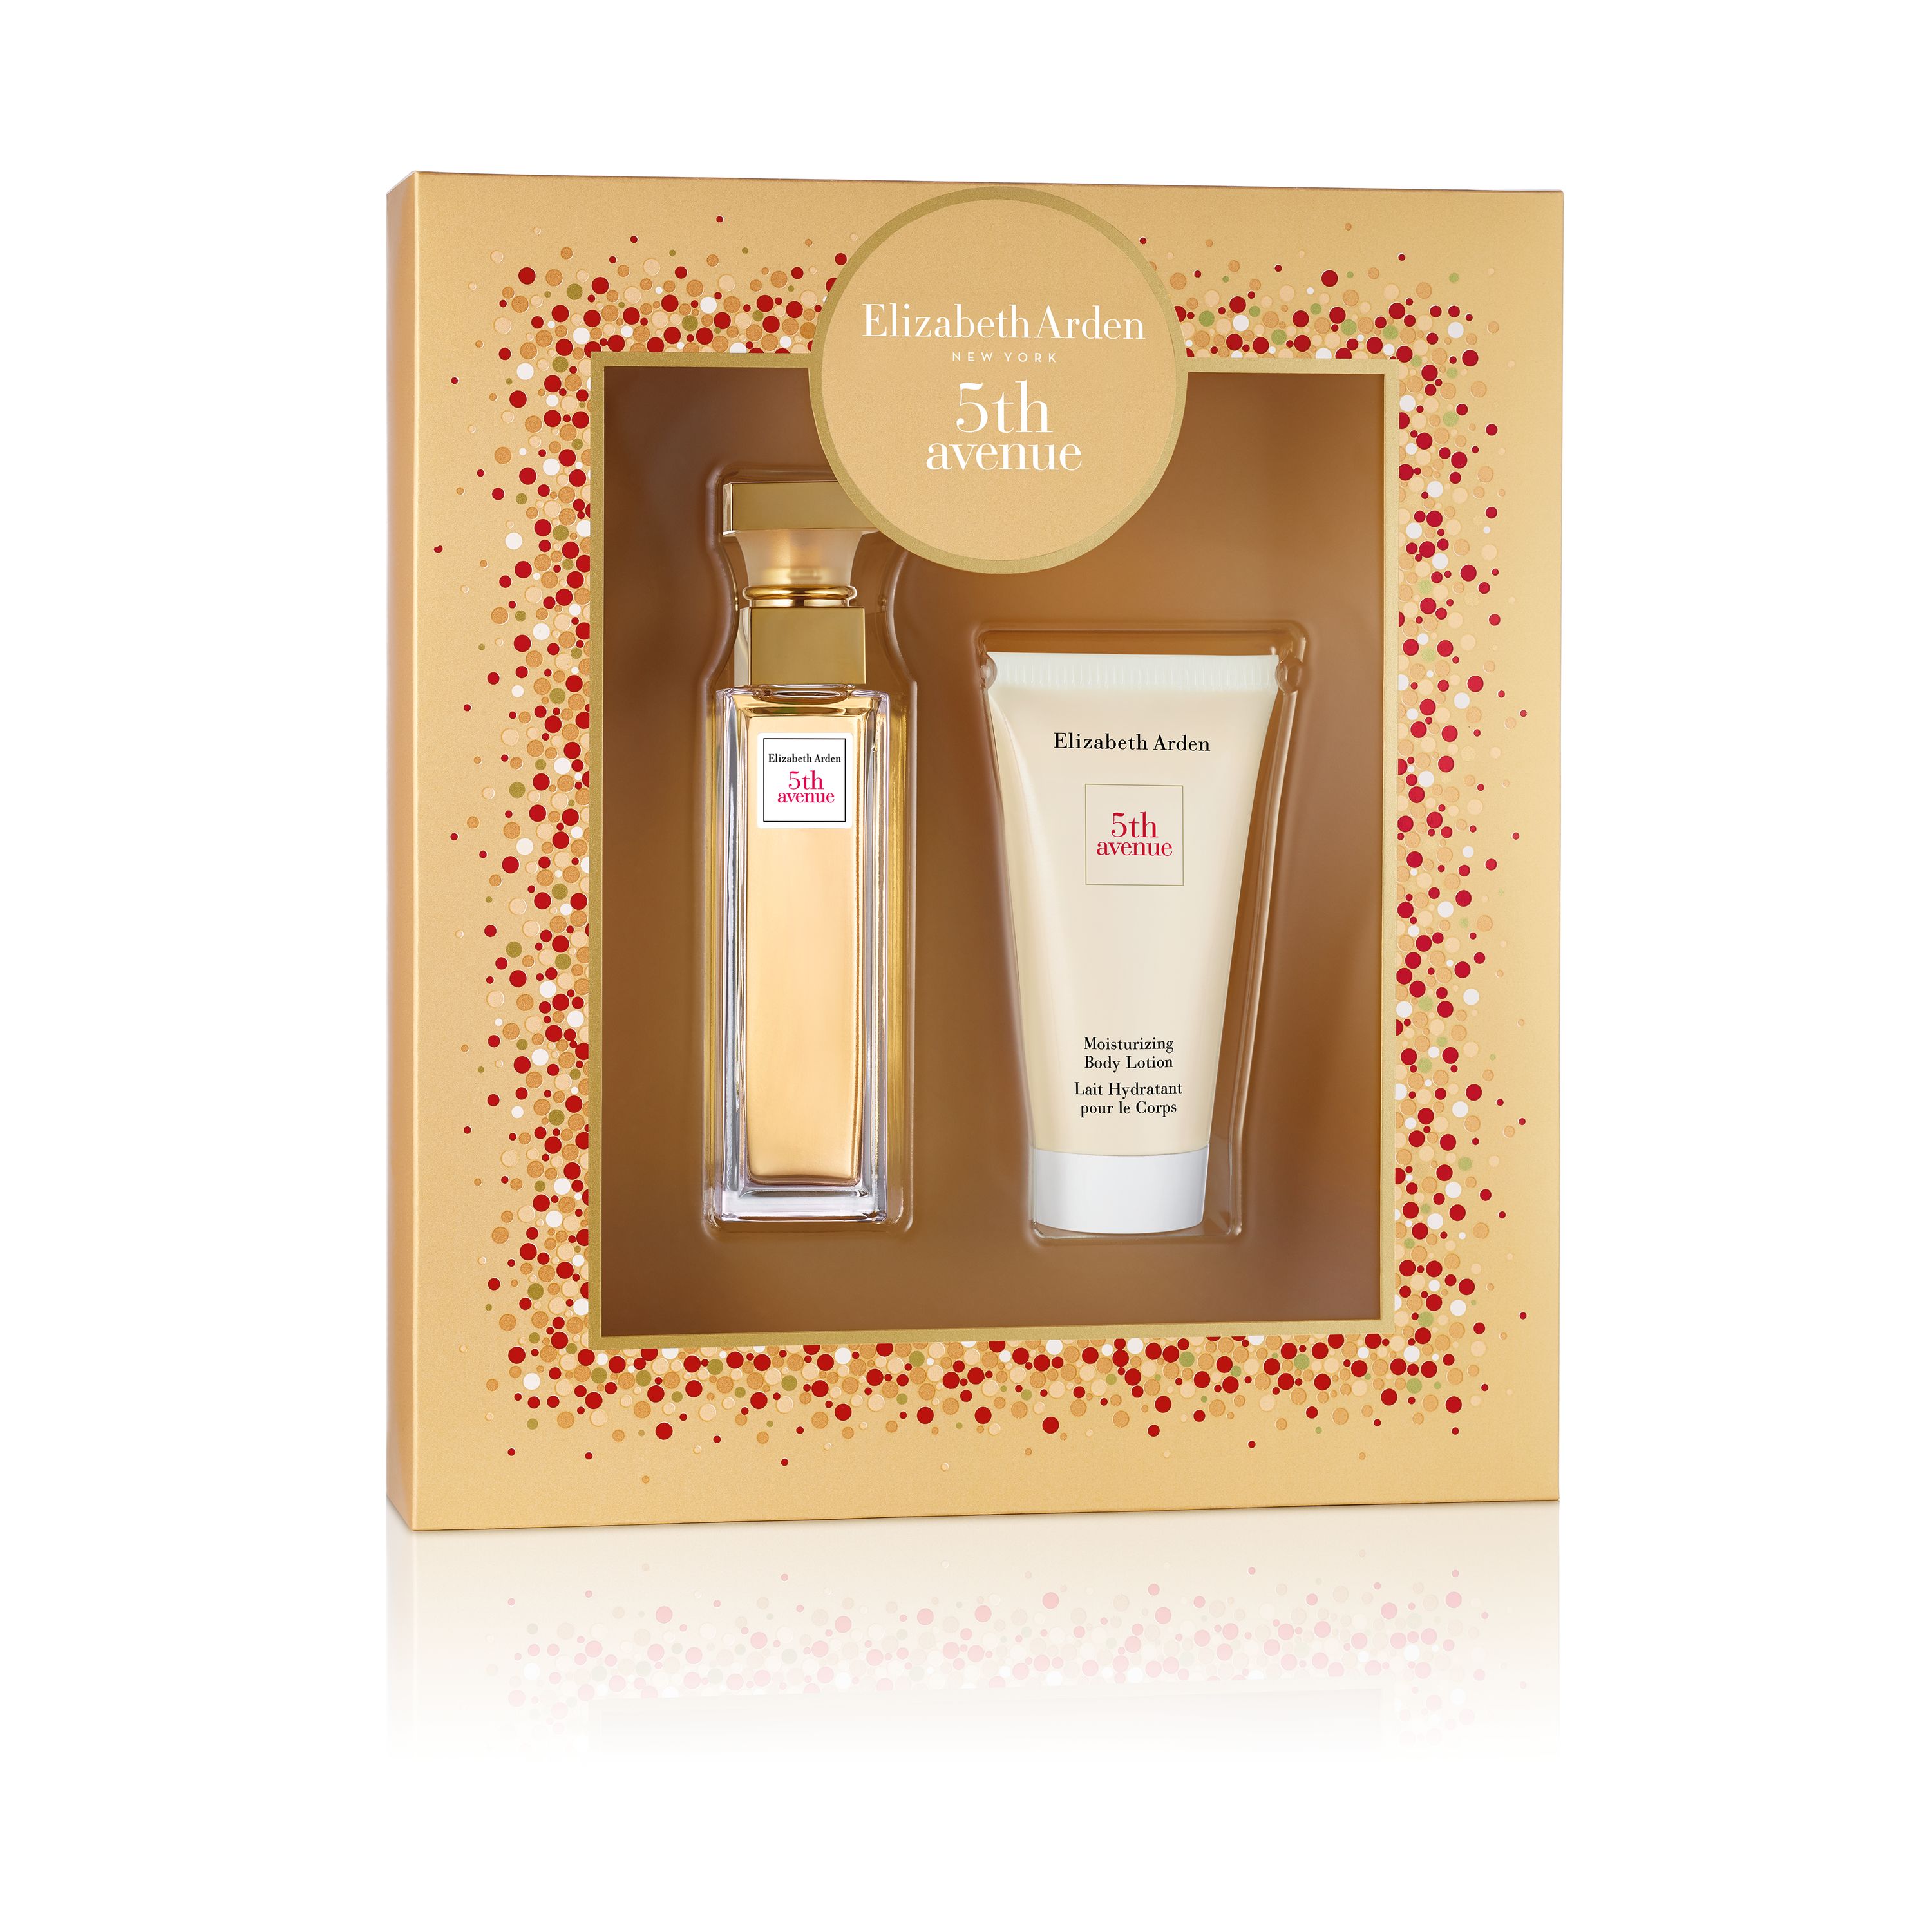 Elizabeth Arden 5th Avenue Perfume Gift Set for Women, 2 piece - image 3 of 3